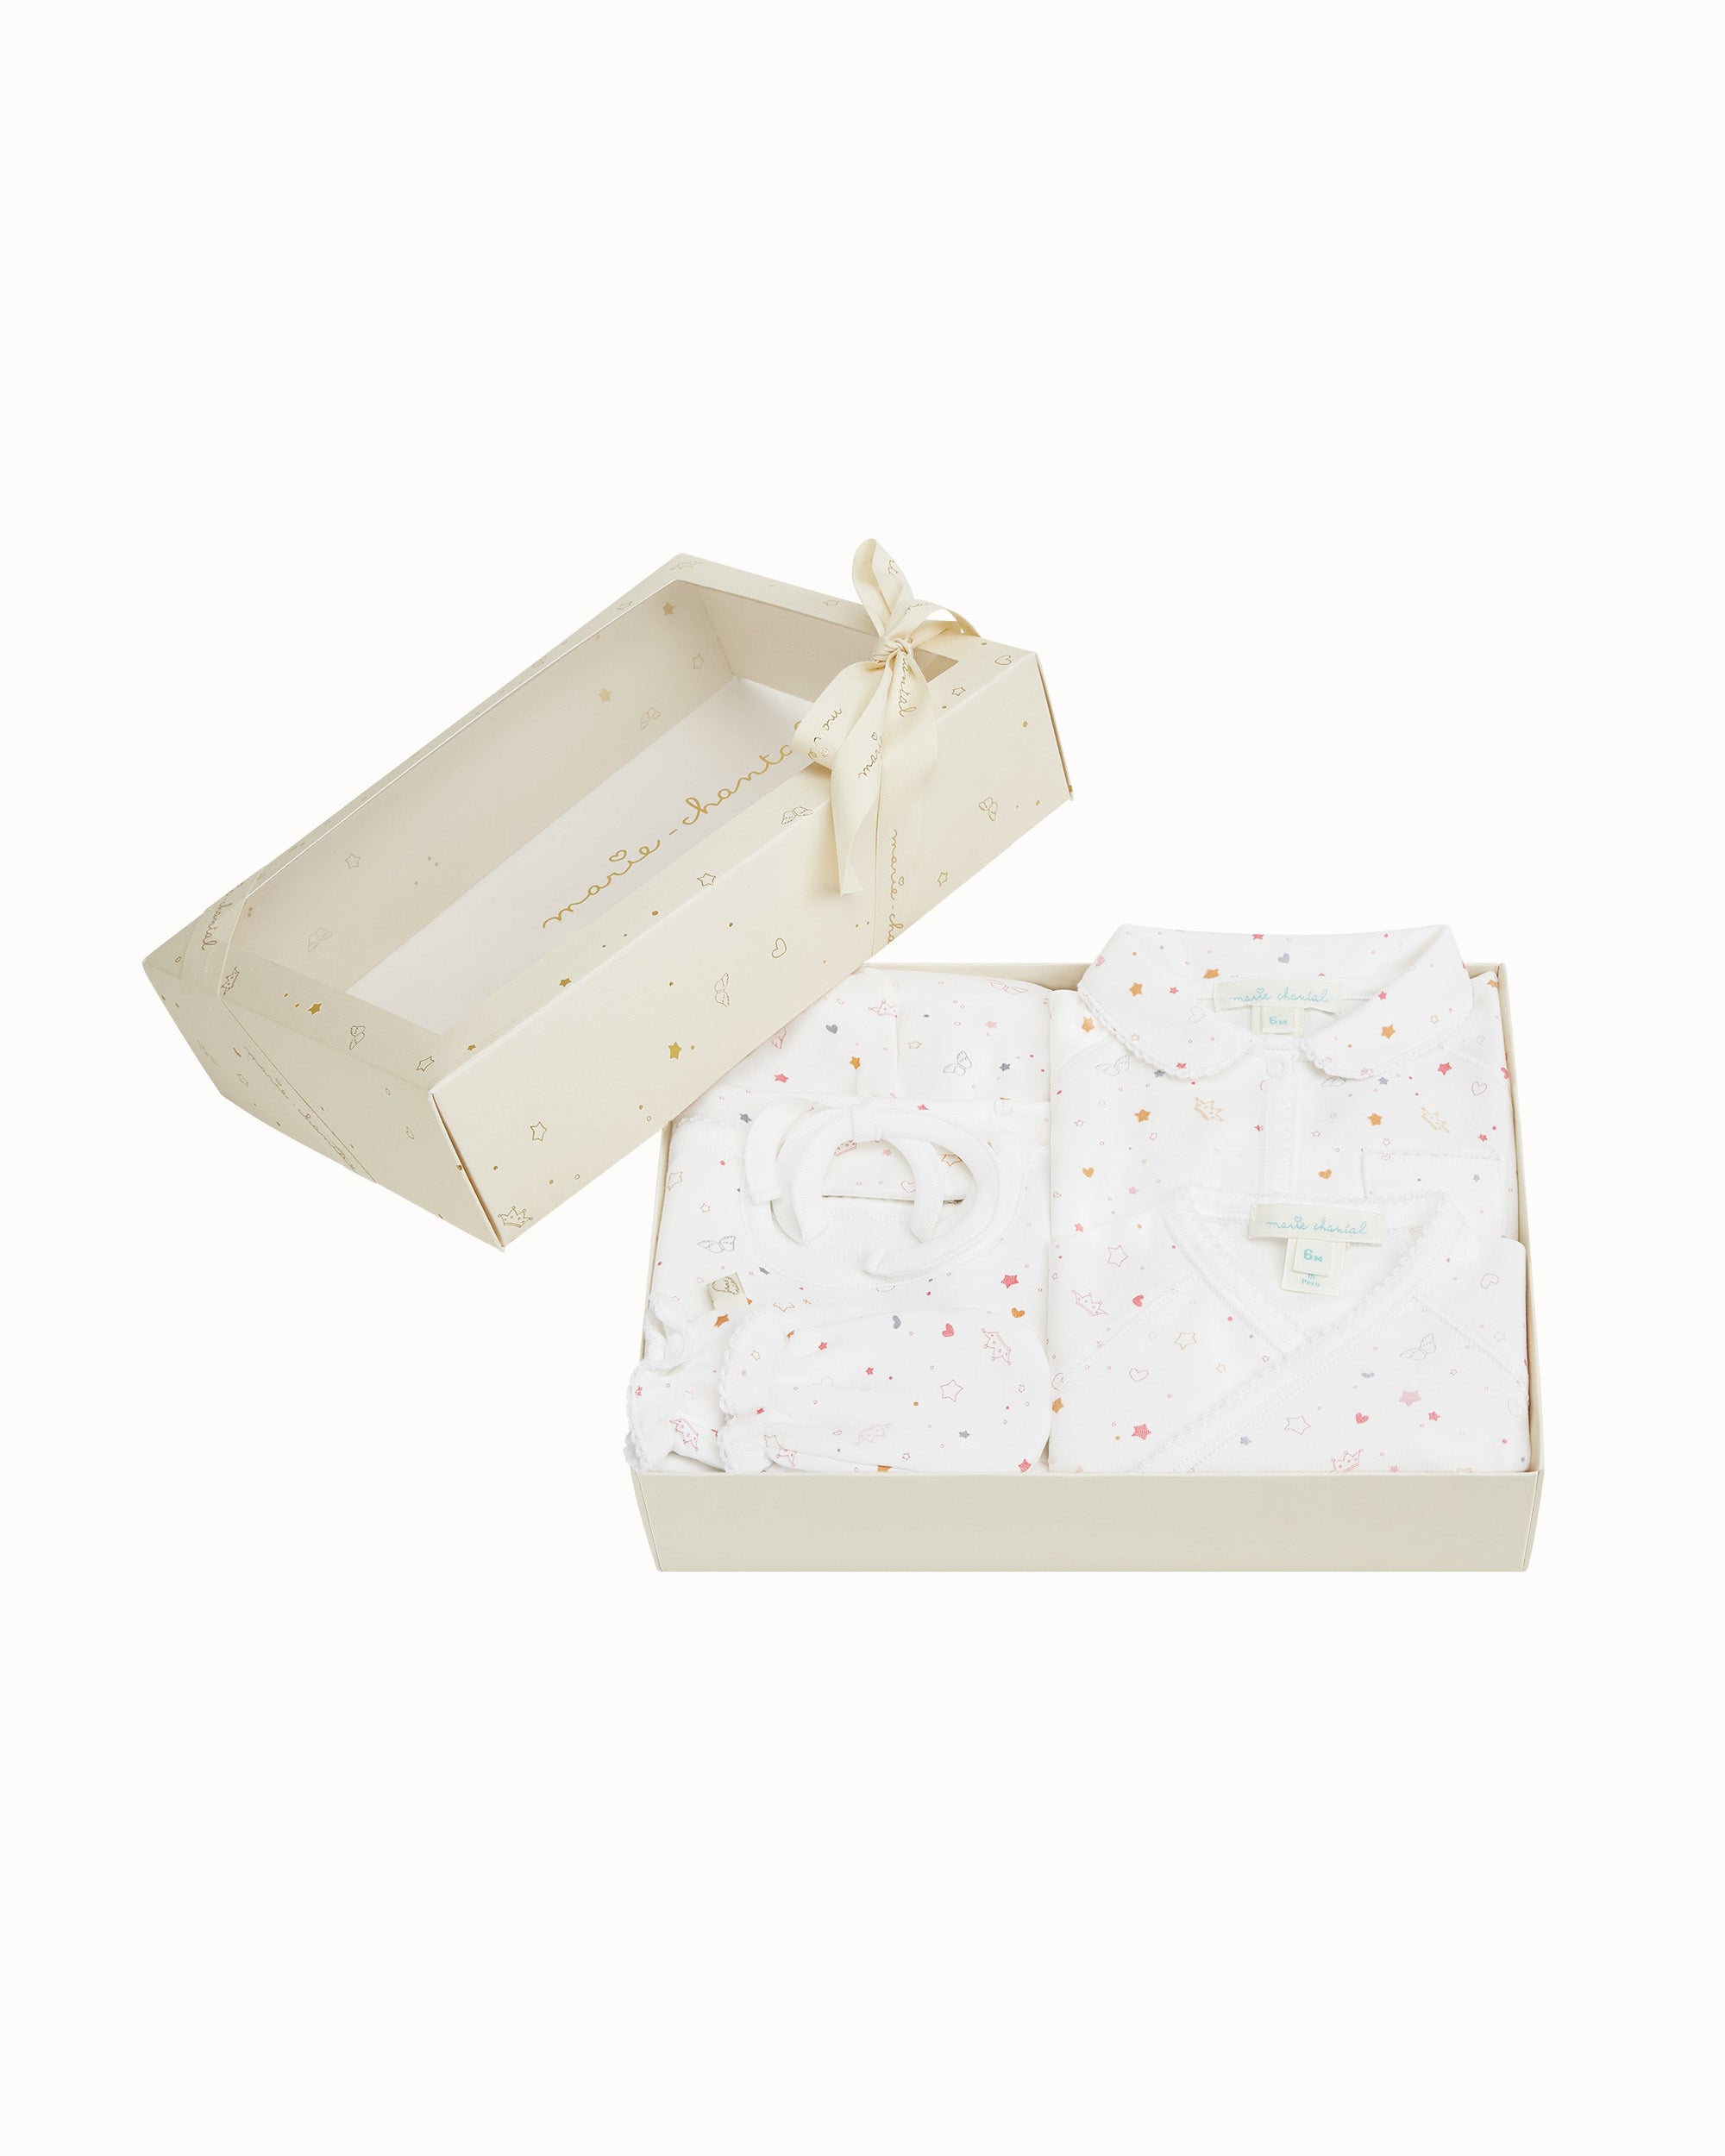 Signature Star & Crown Gift Set - Pink